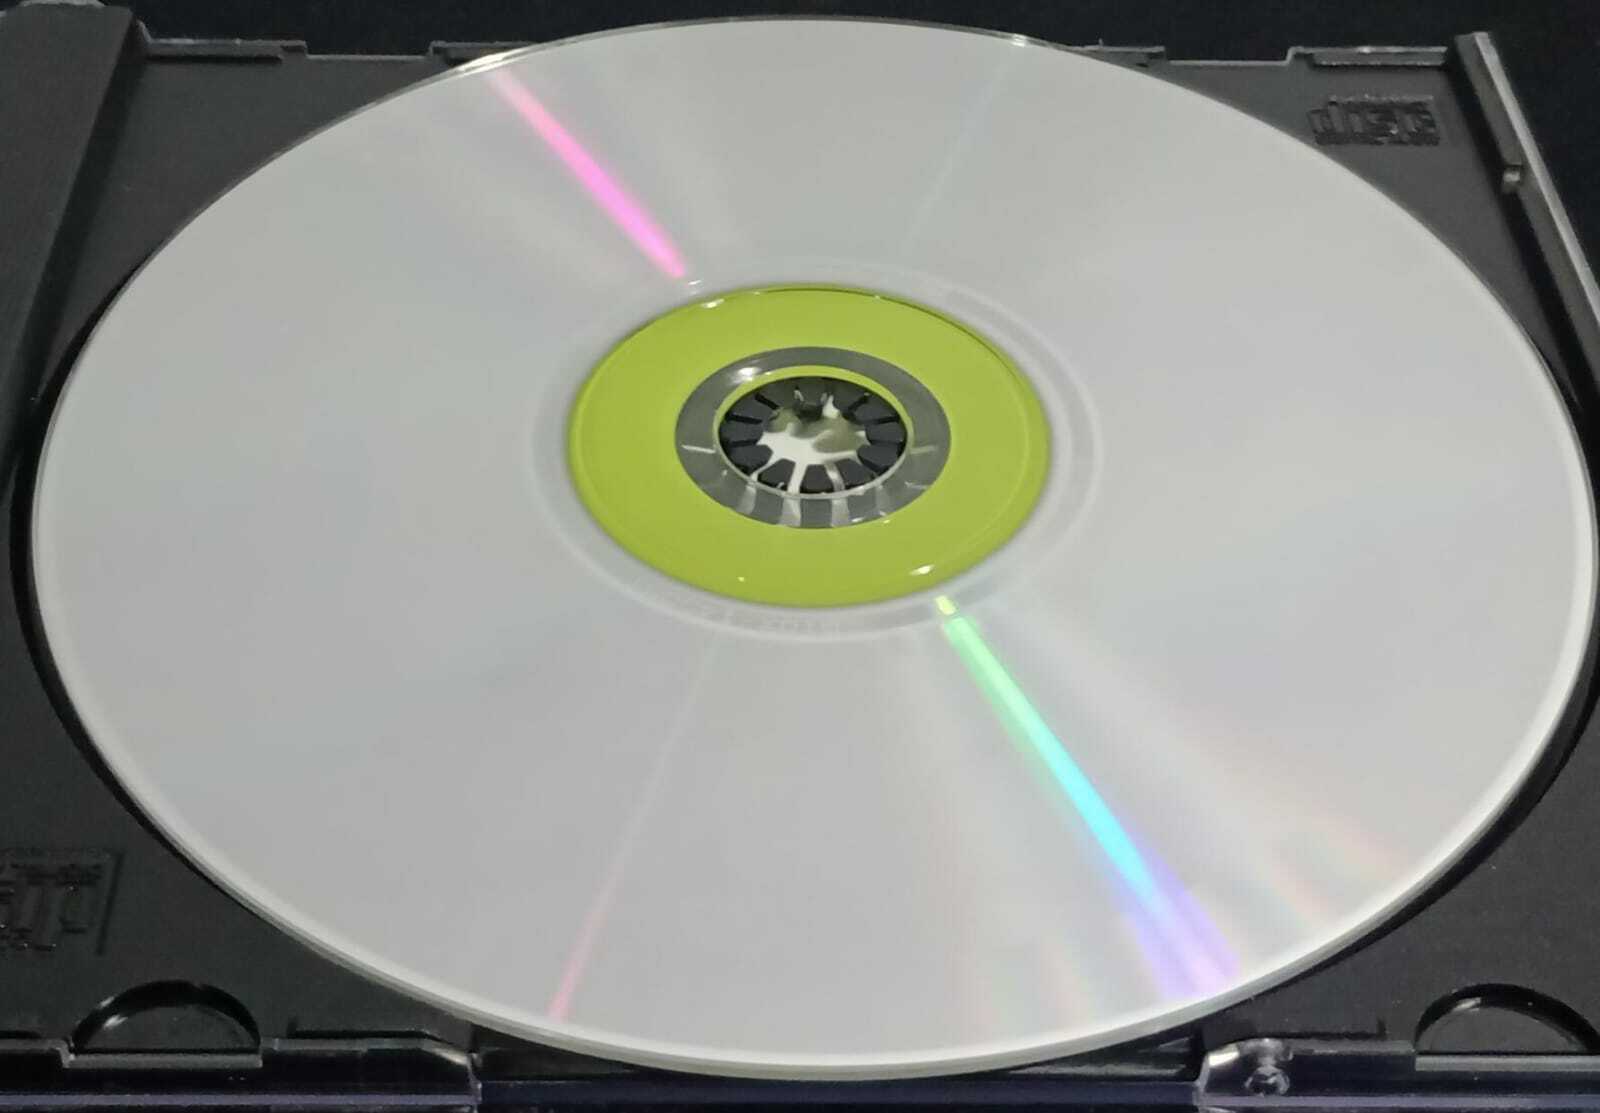 CD - White Zombie - La Sexorcisto: Devil Music Vol 1 (usa)